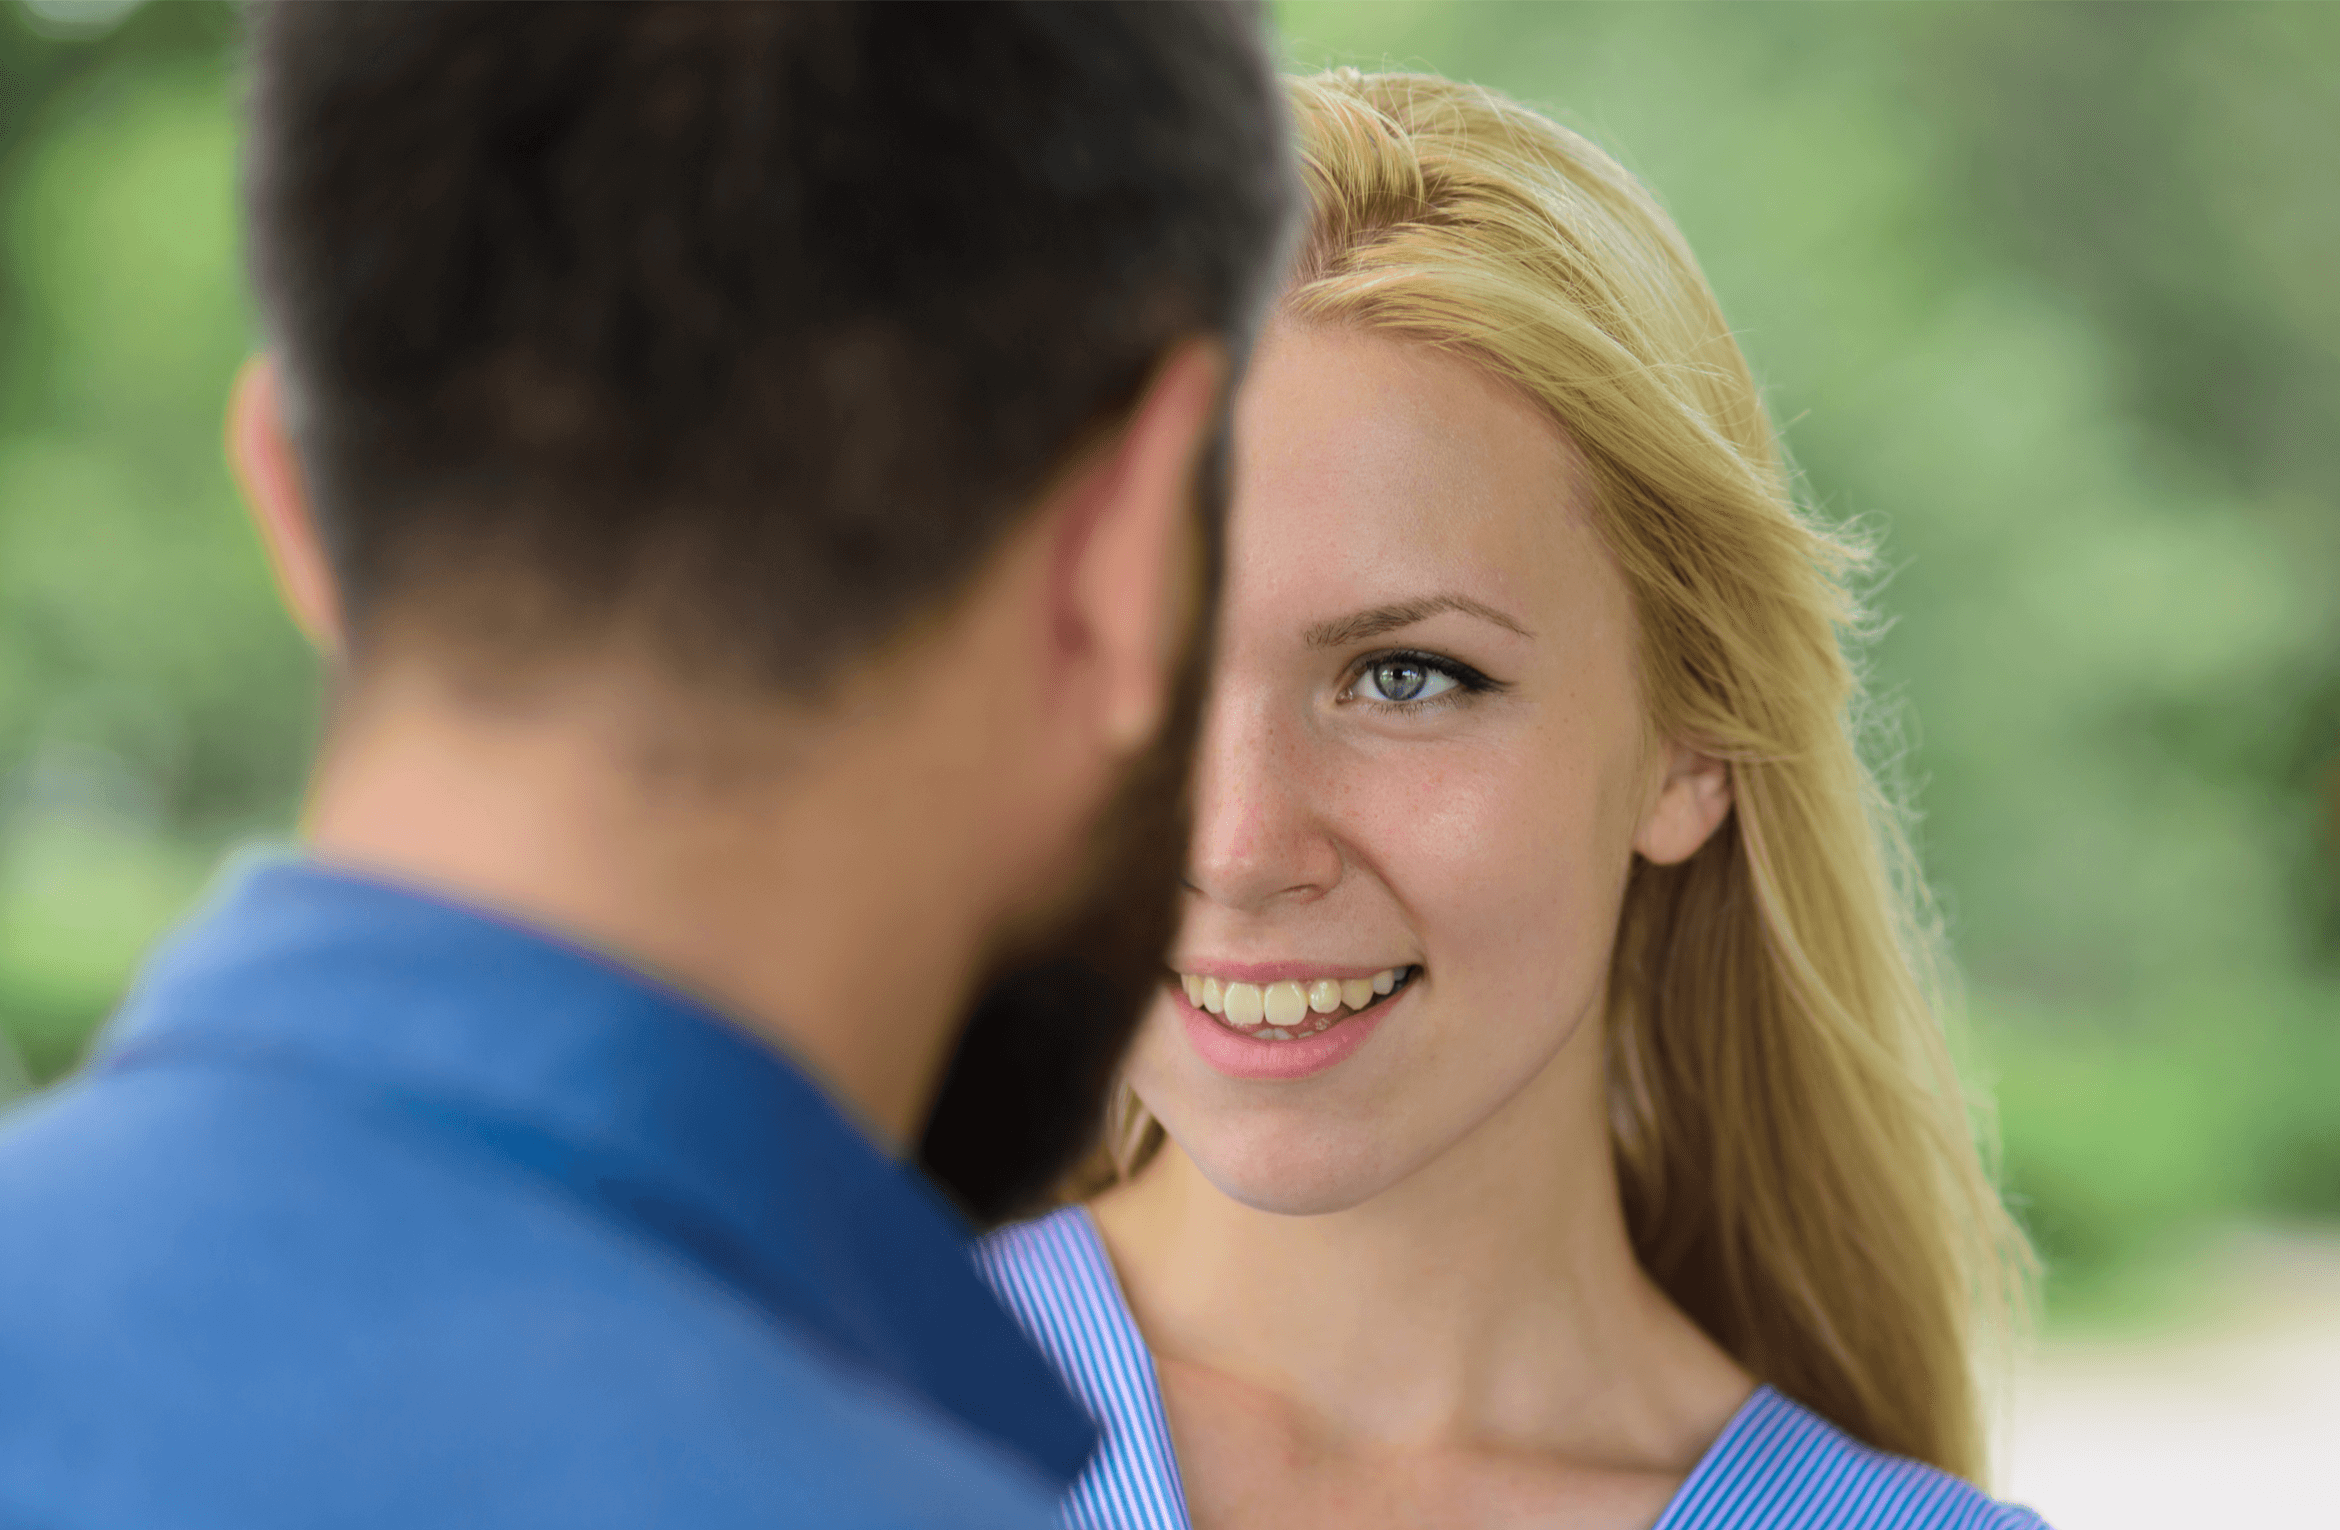 Effeminate men dating 21 Ways